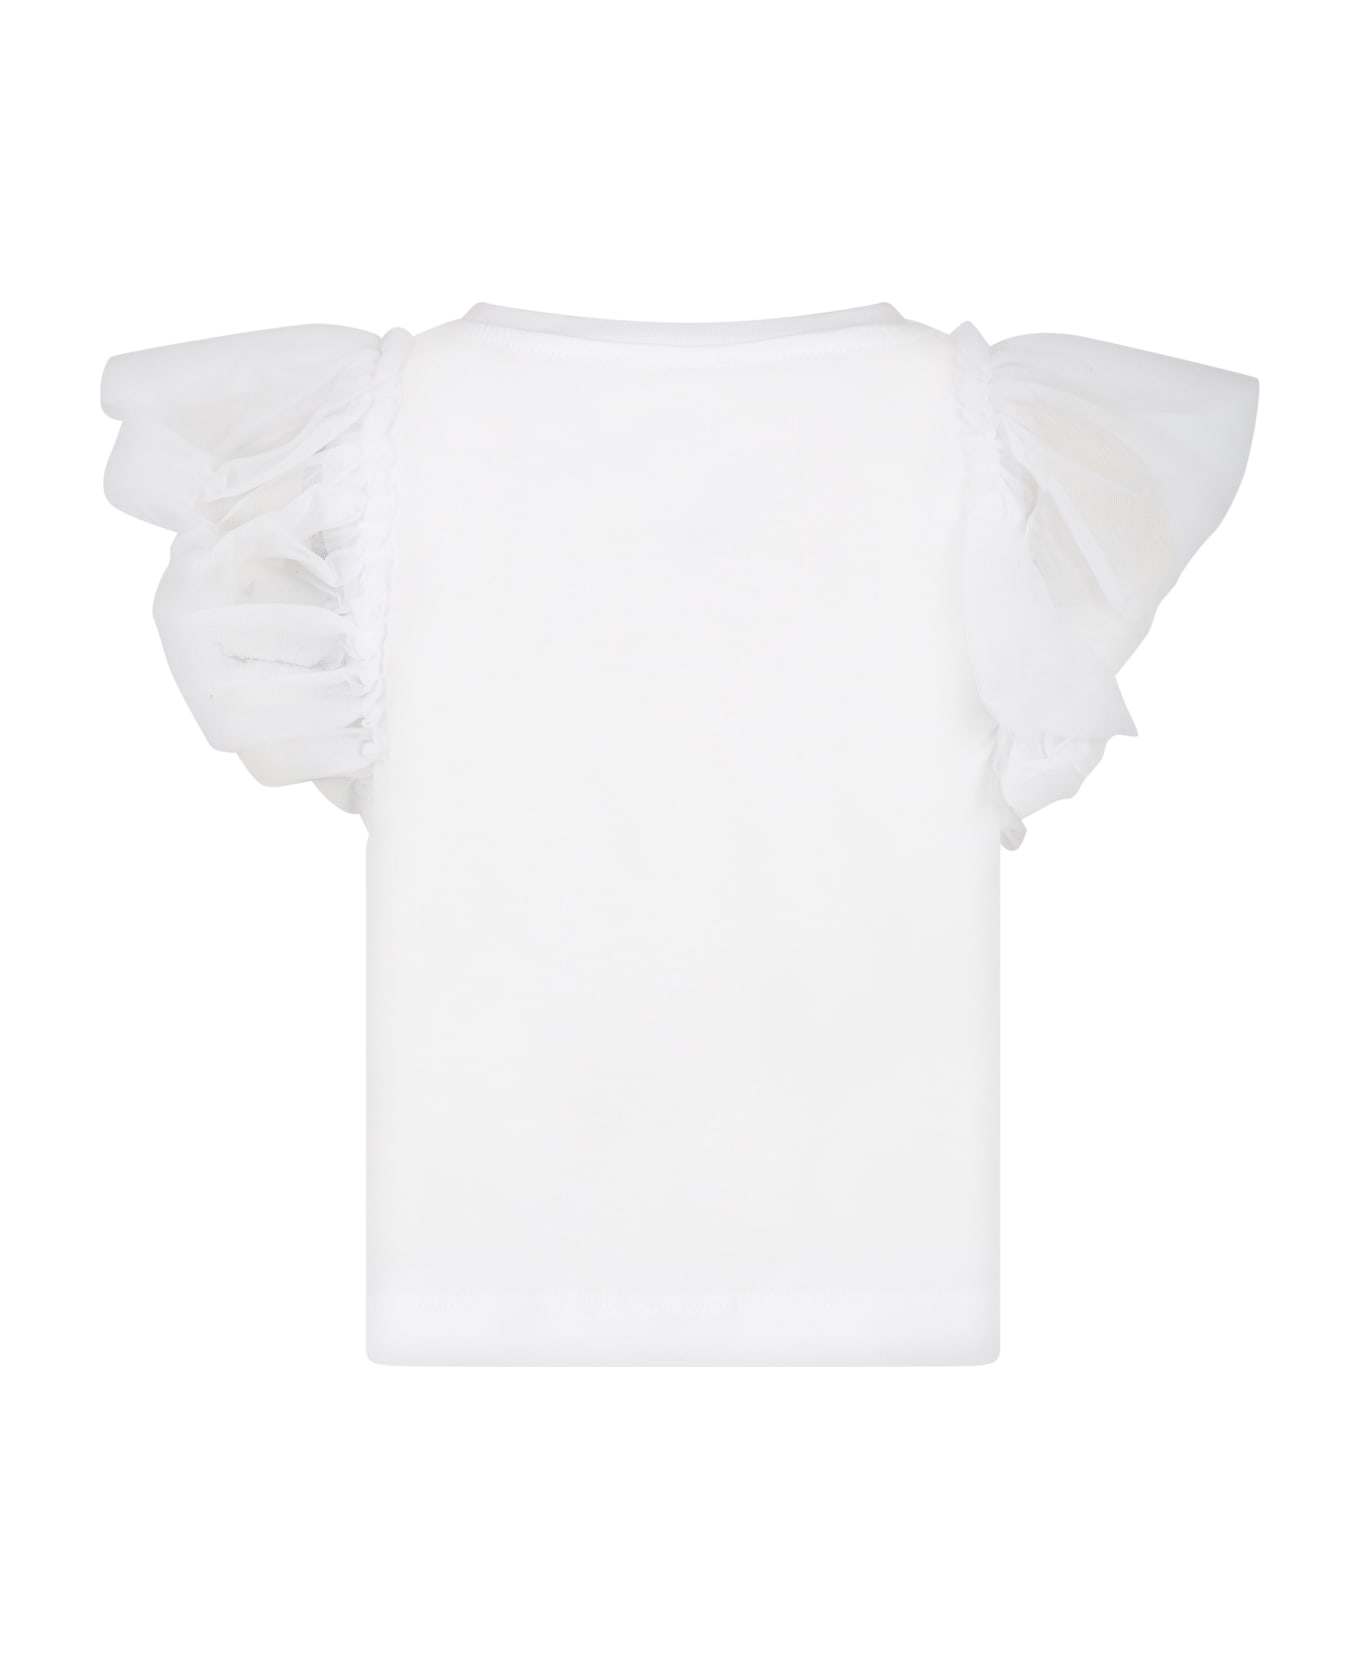 Chiara Ferragni White T-shirt For Girl With Iconic Winks - WHITE